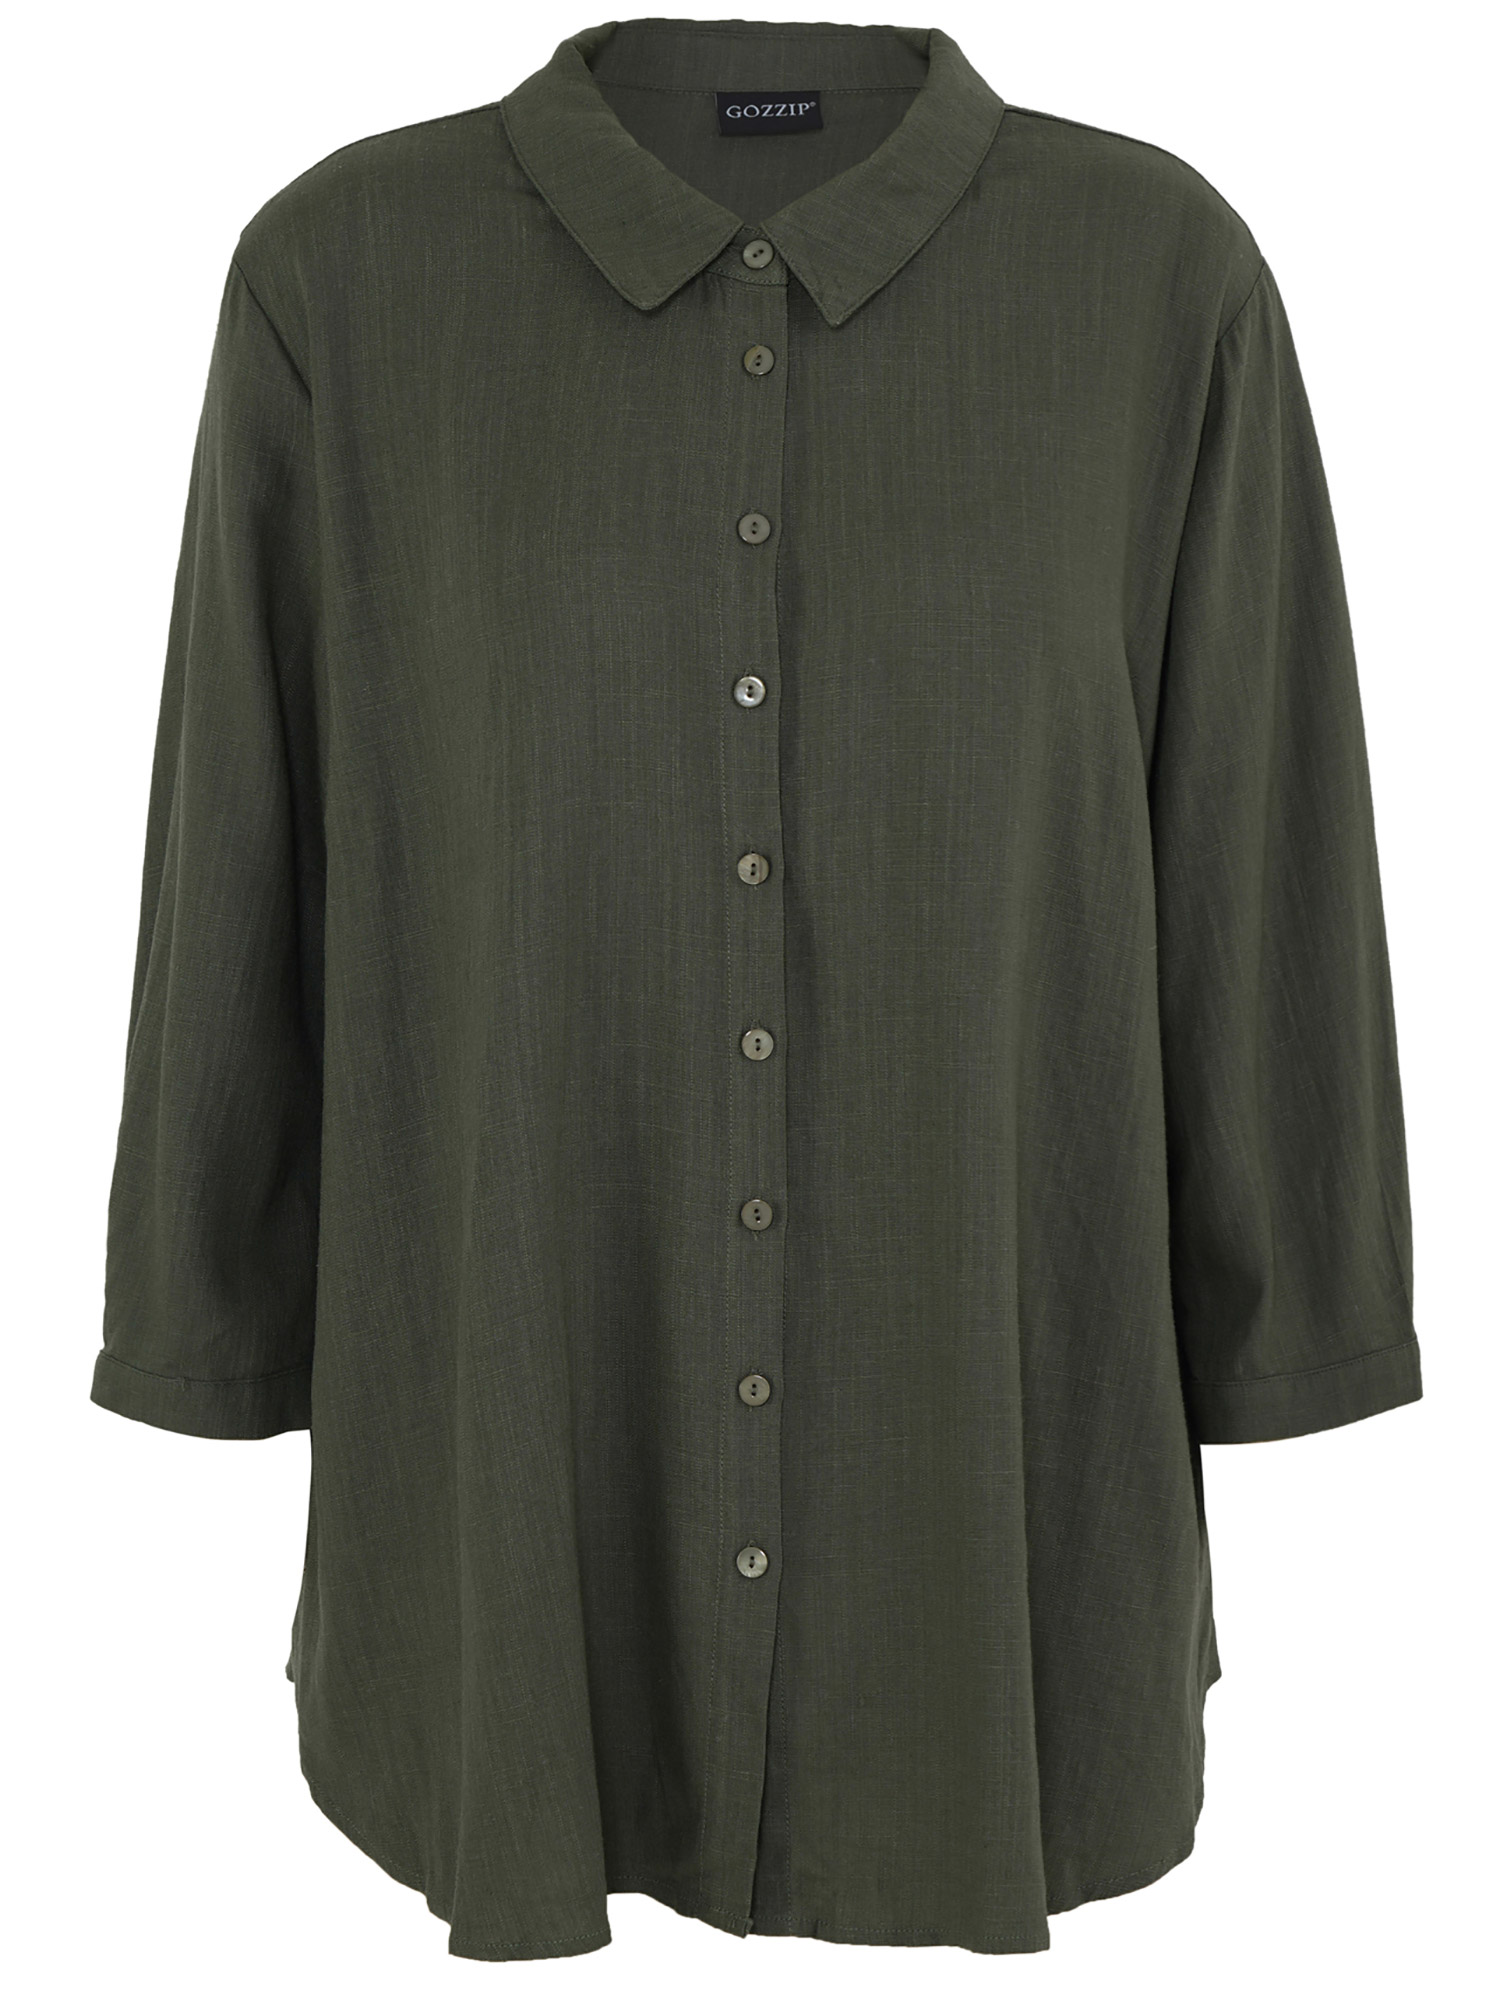 KARINA - grön skjorta i exklusiv viskos/Linnekvalitet fra Gozzip